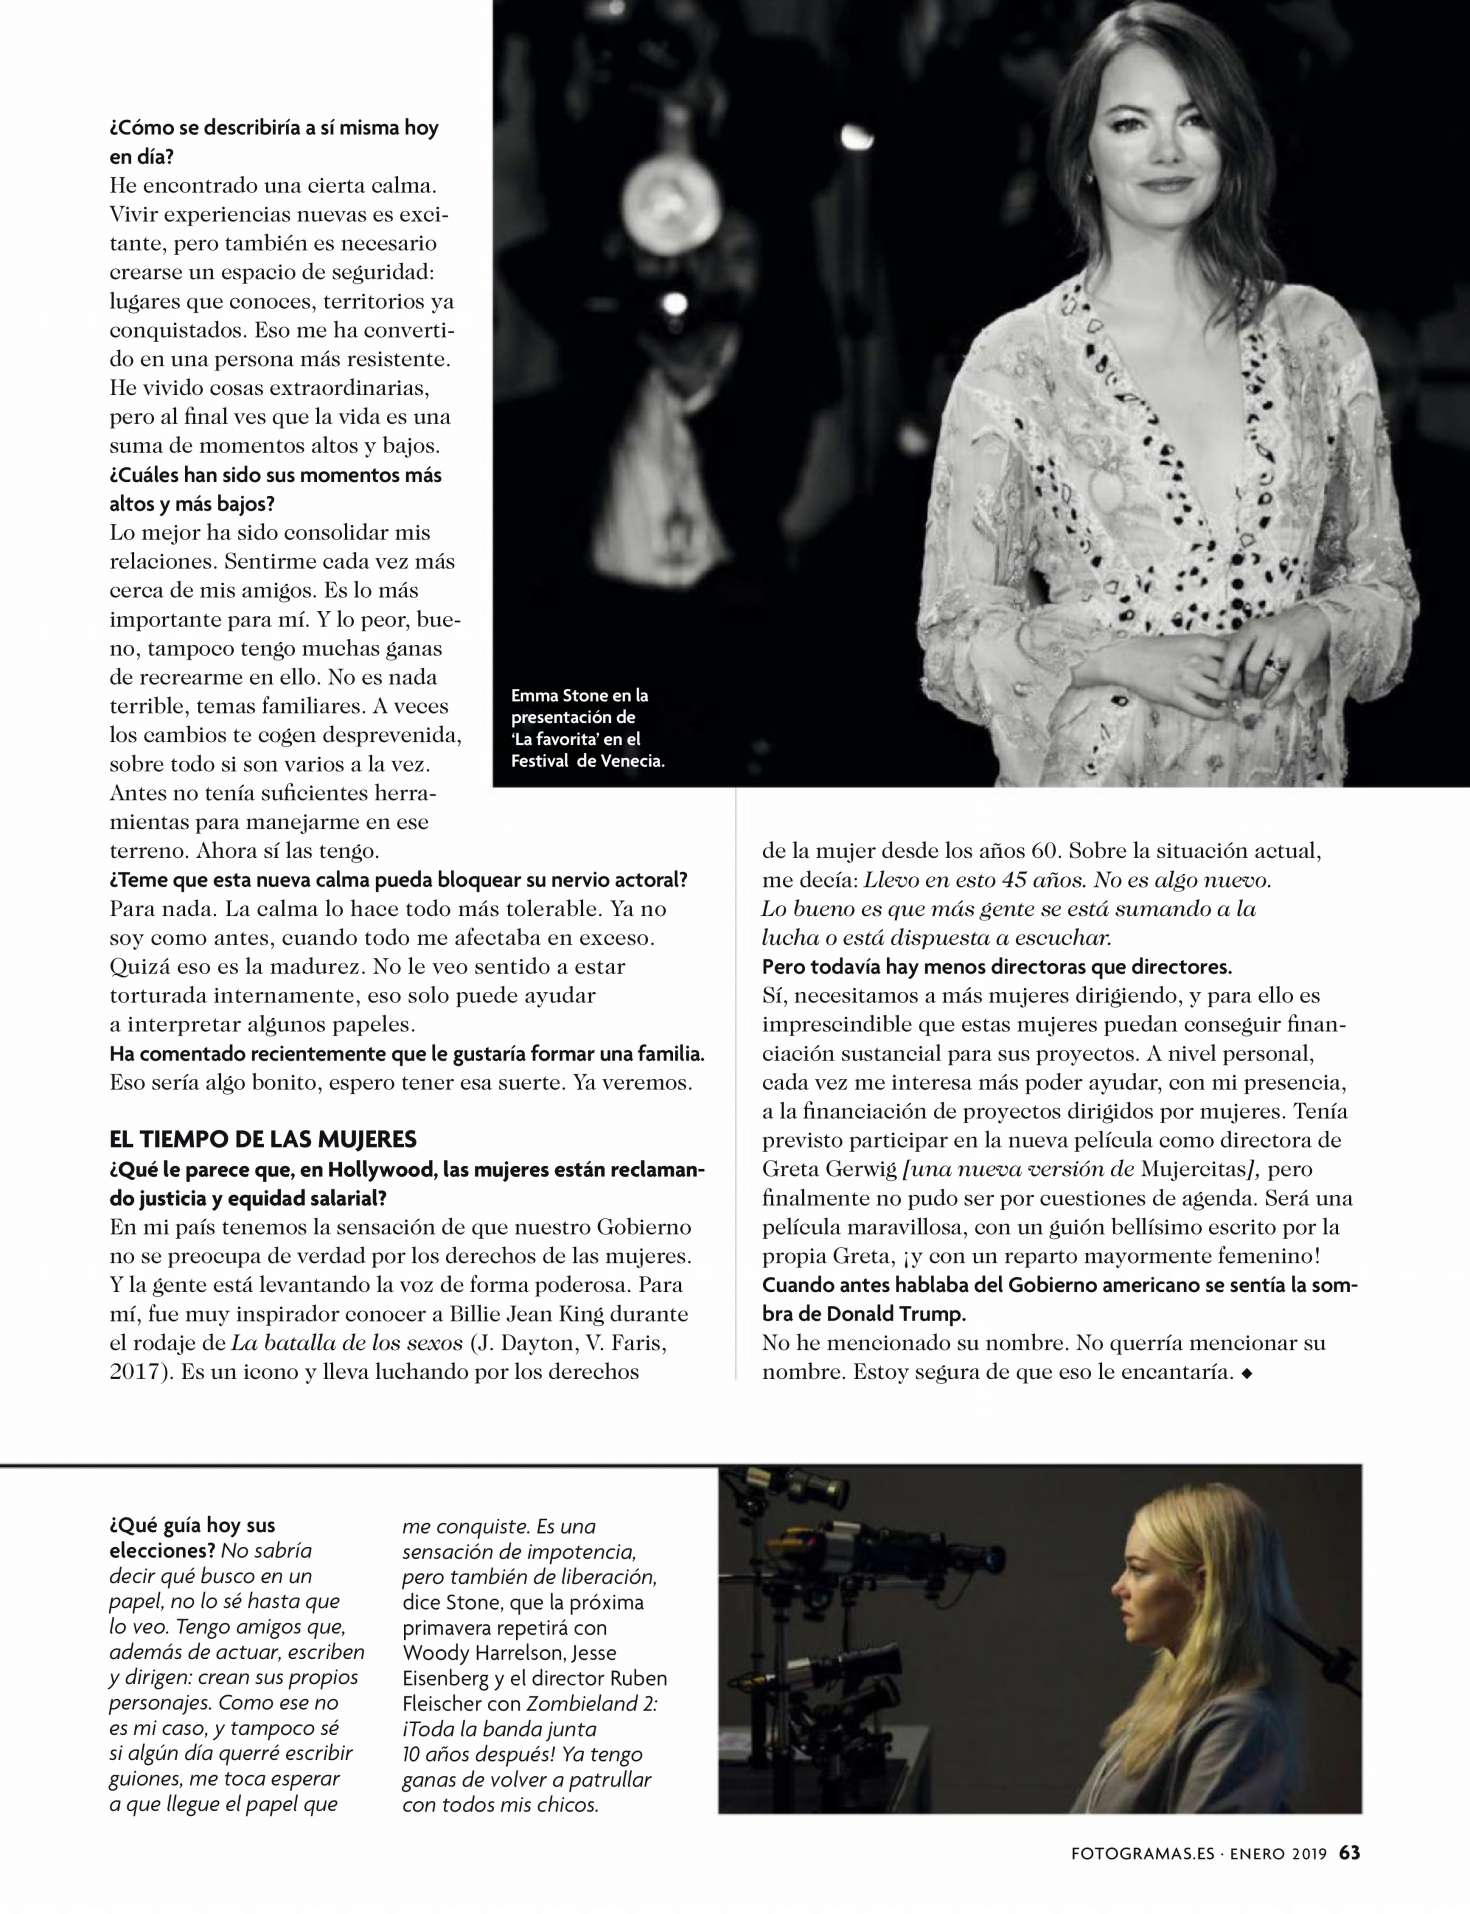 Emma Stone â€“ Fotogramas Magazine (January 2019)